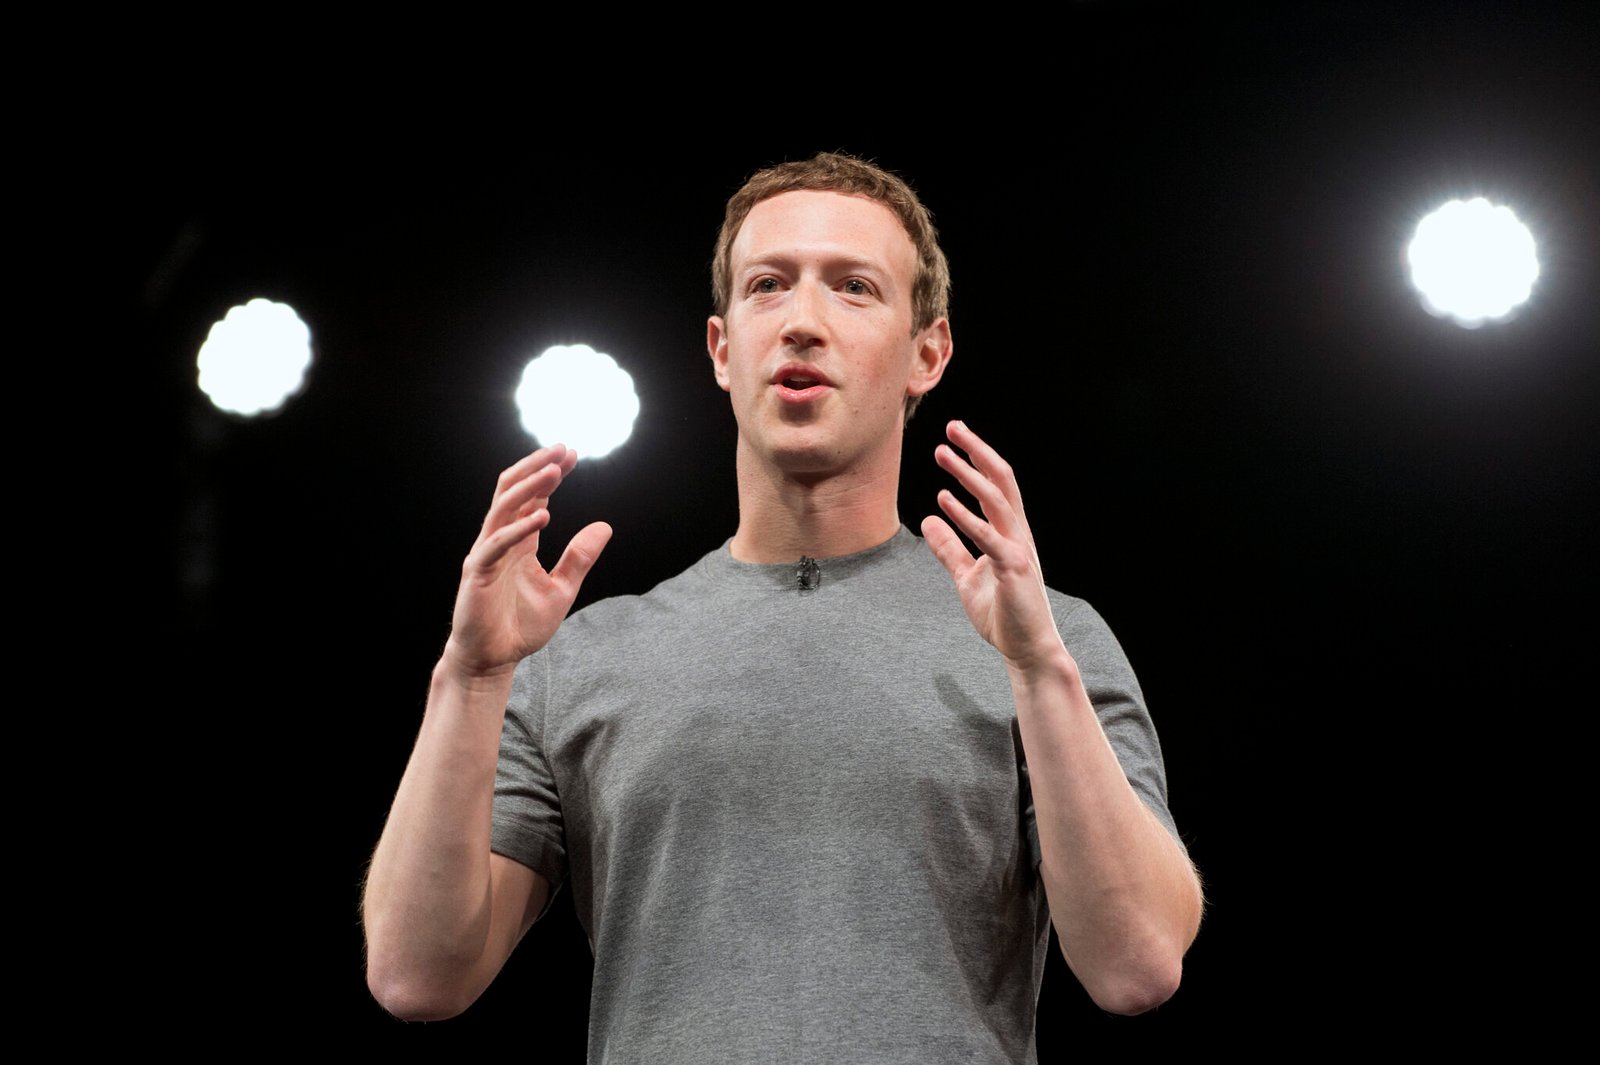 Founder and CEO of Facebook Mark Zuckerberg